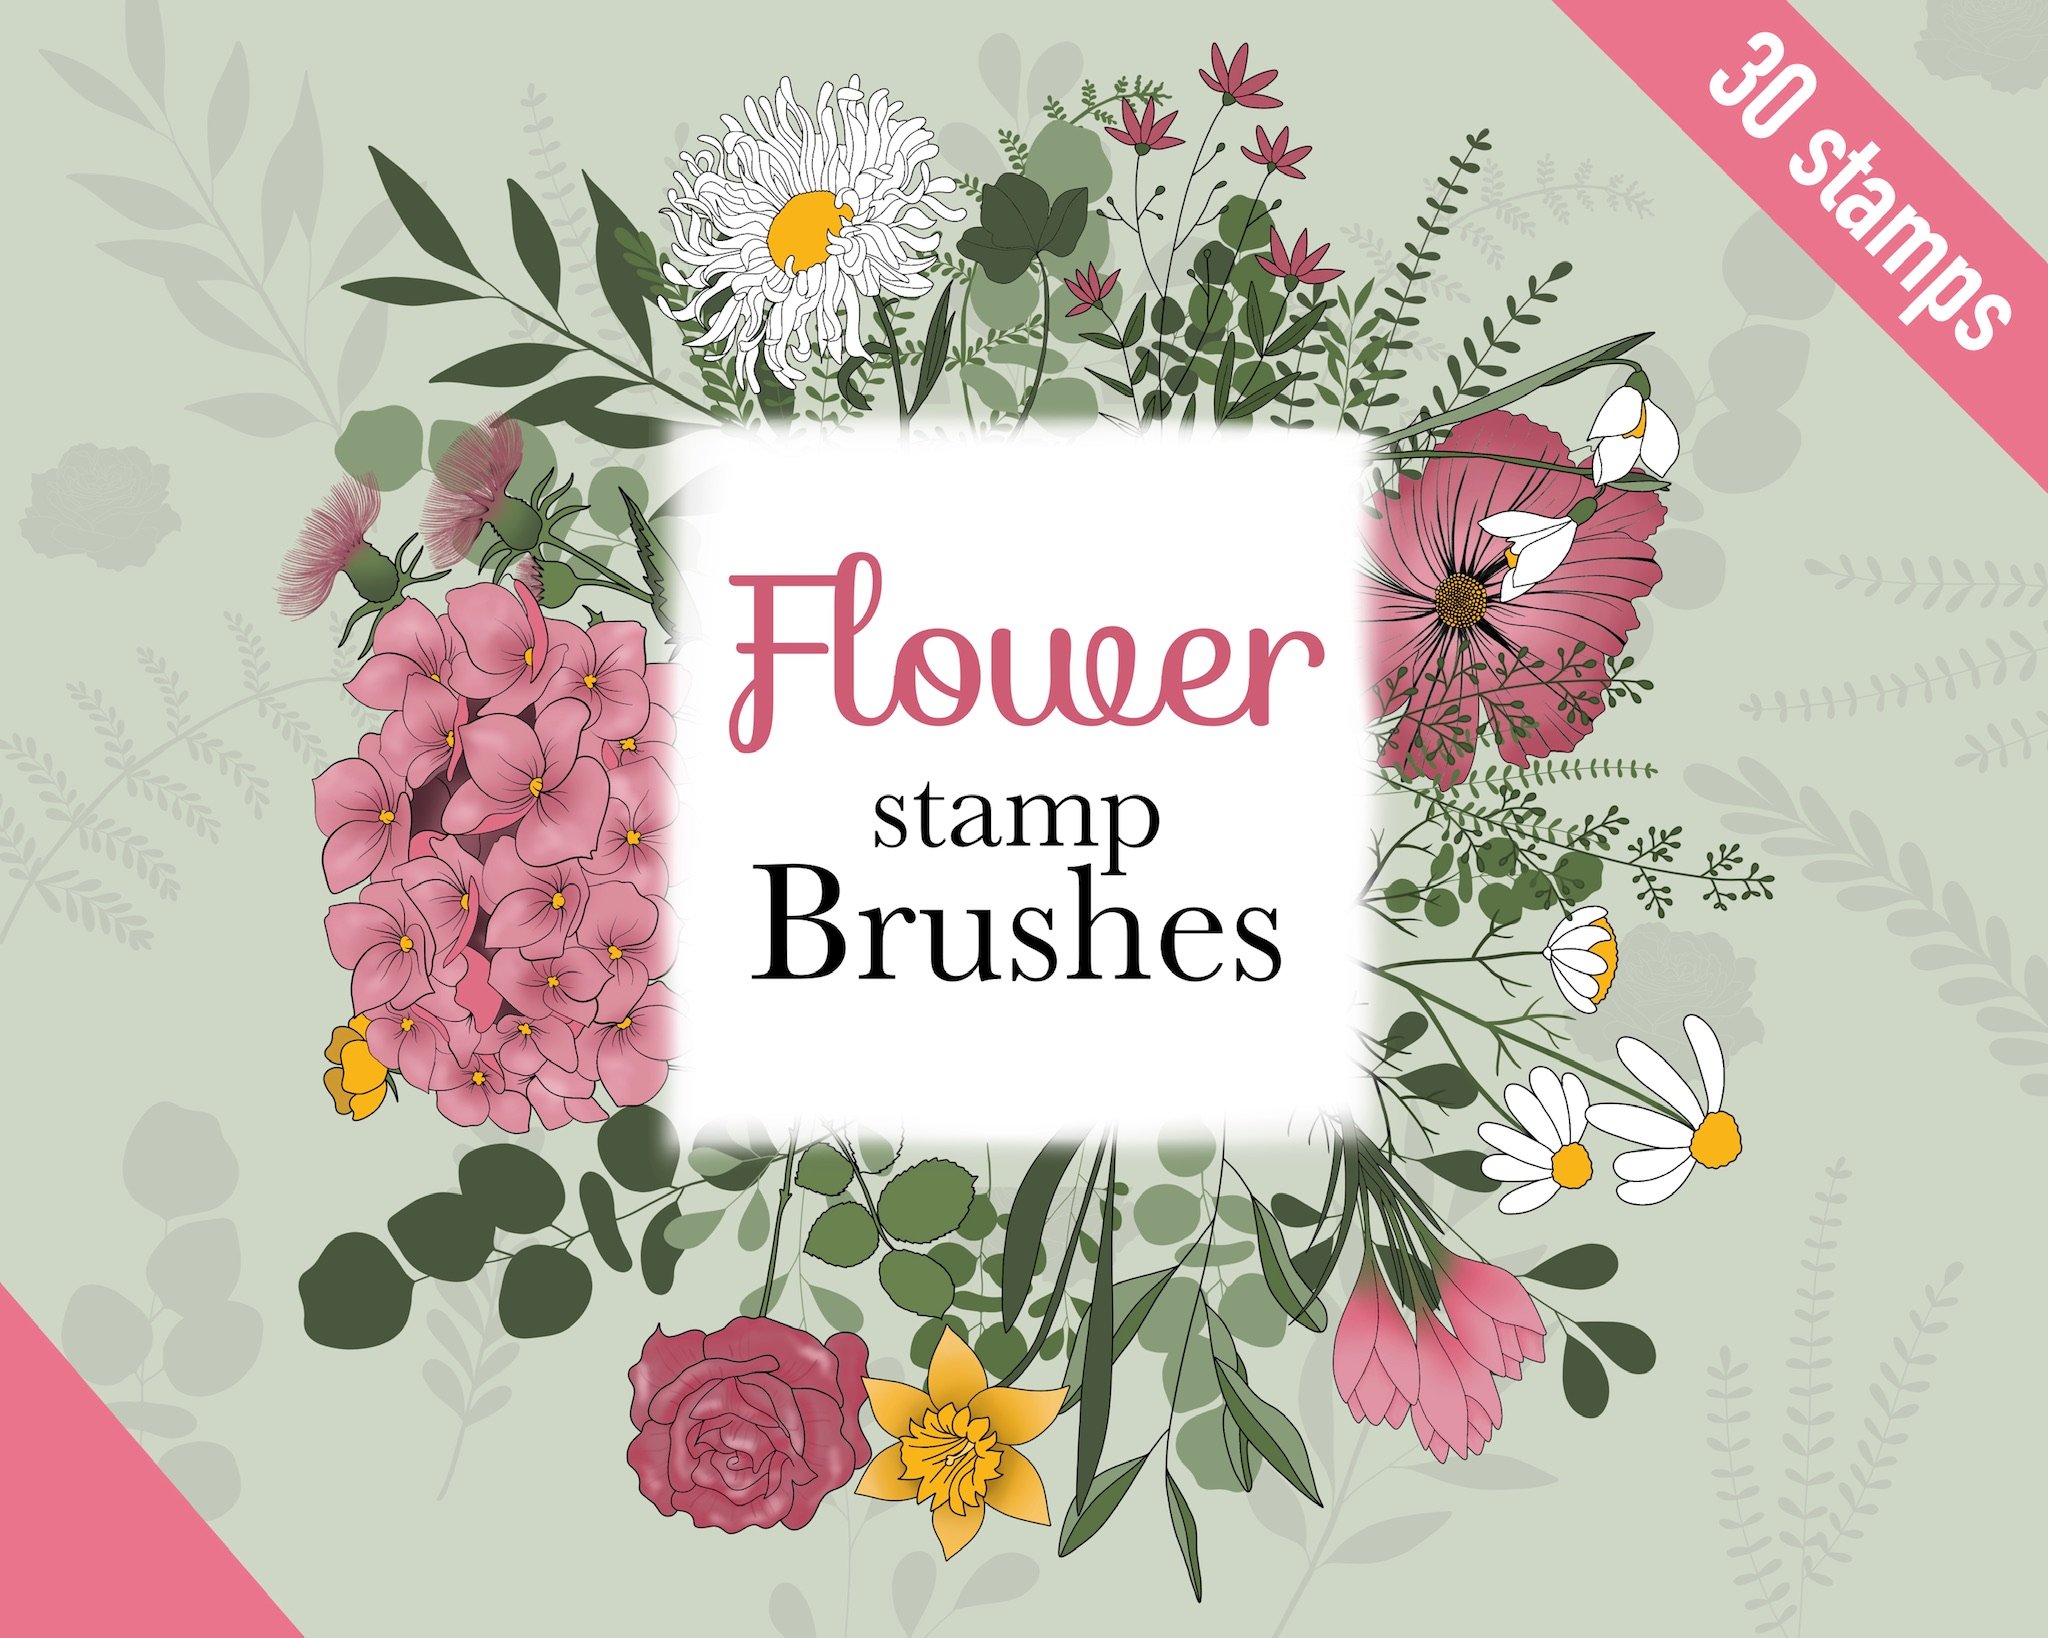 Photoshop - 10 Flower Stamps/ Brushes Graphic by AnnaDigitalStudio